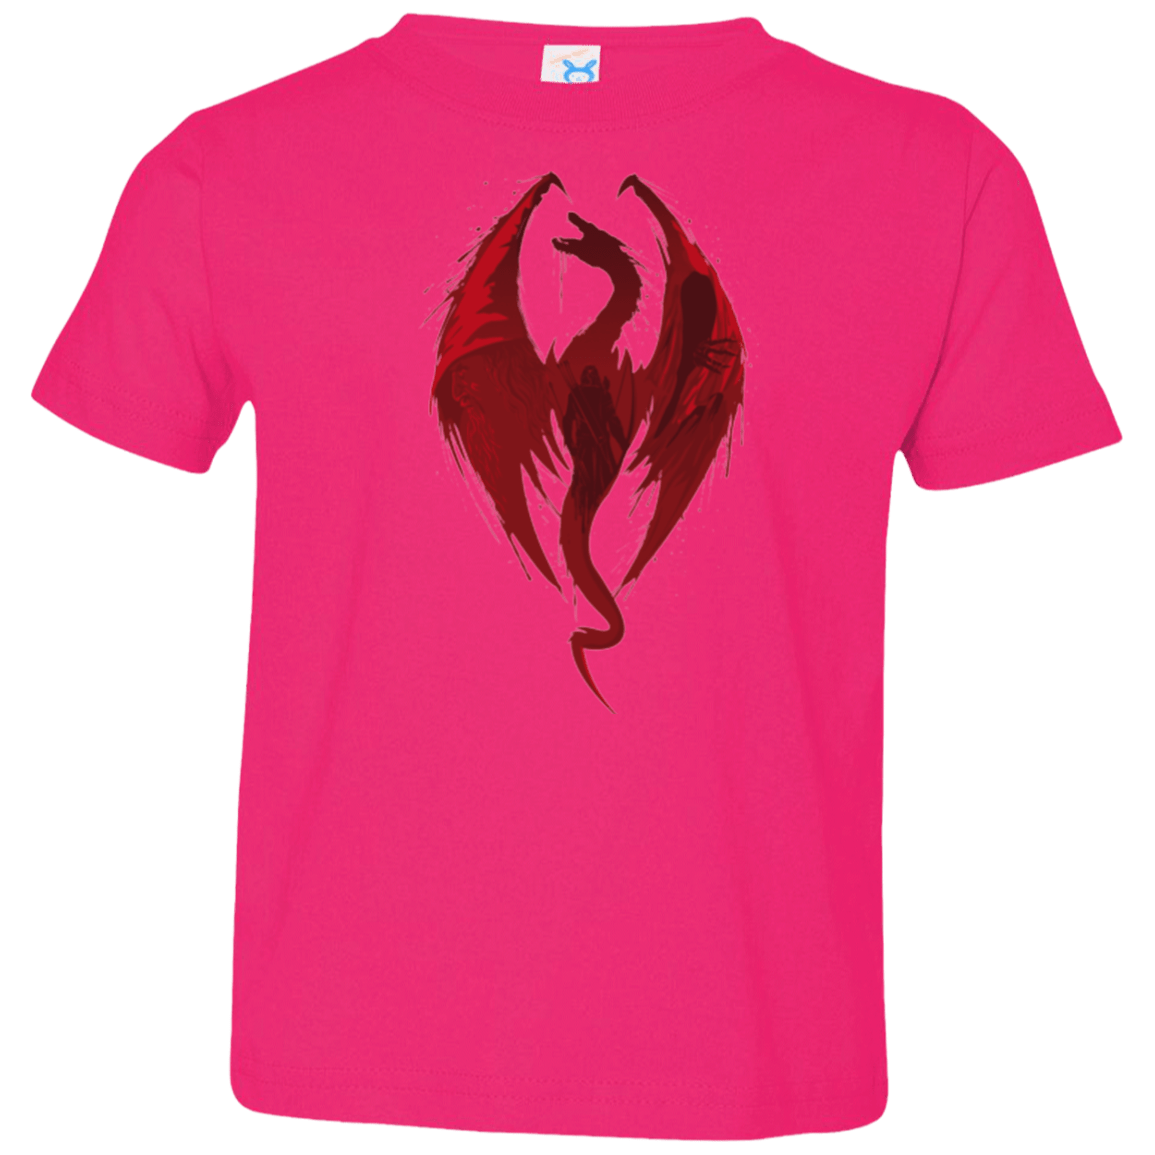 T-Shirts Hot Pink / 2T Smaug's Bane Toddler Premium T-Shirt